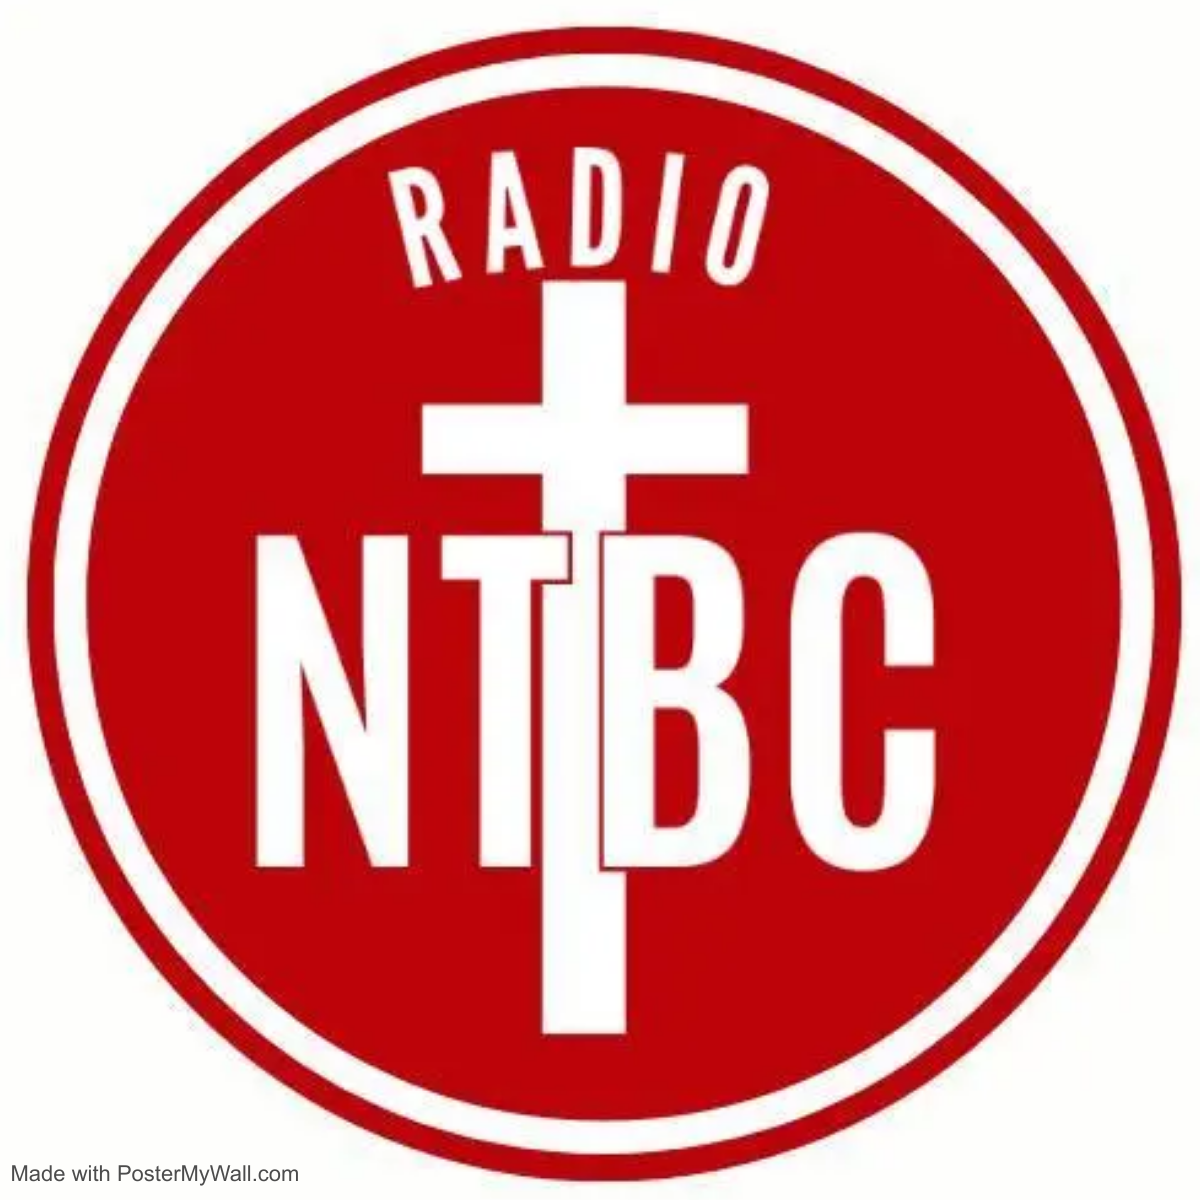 Radio Ntbc Creole